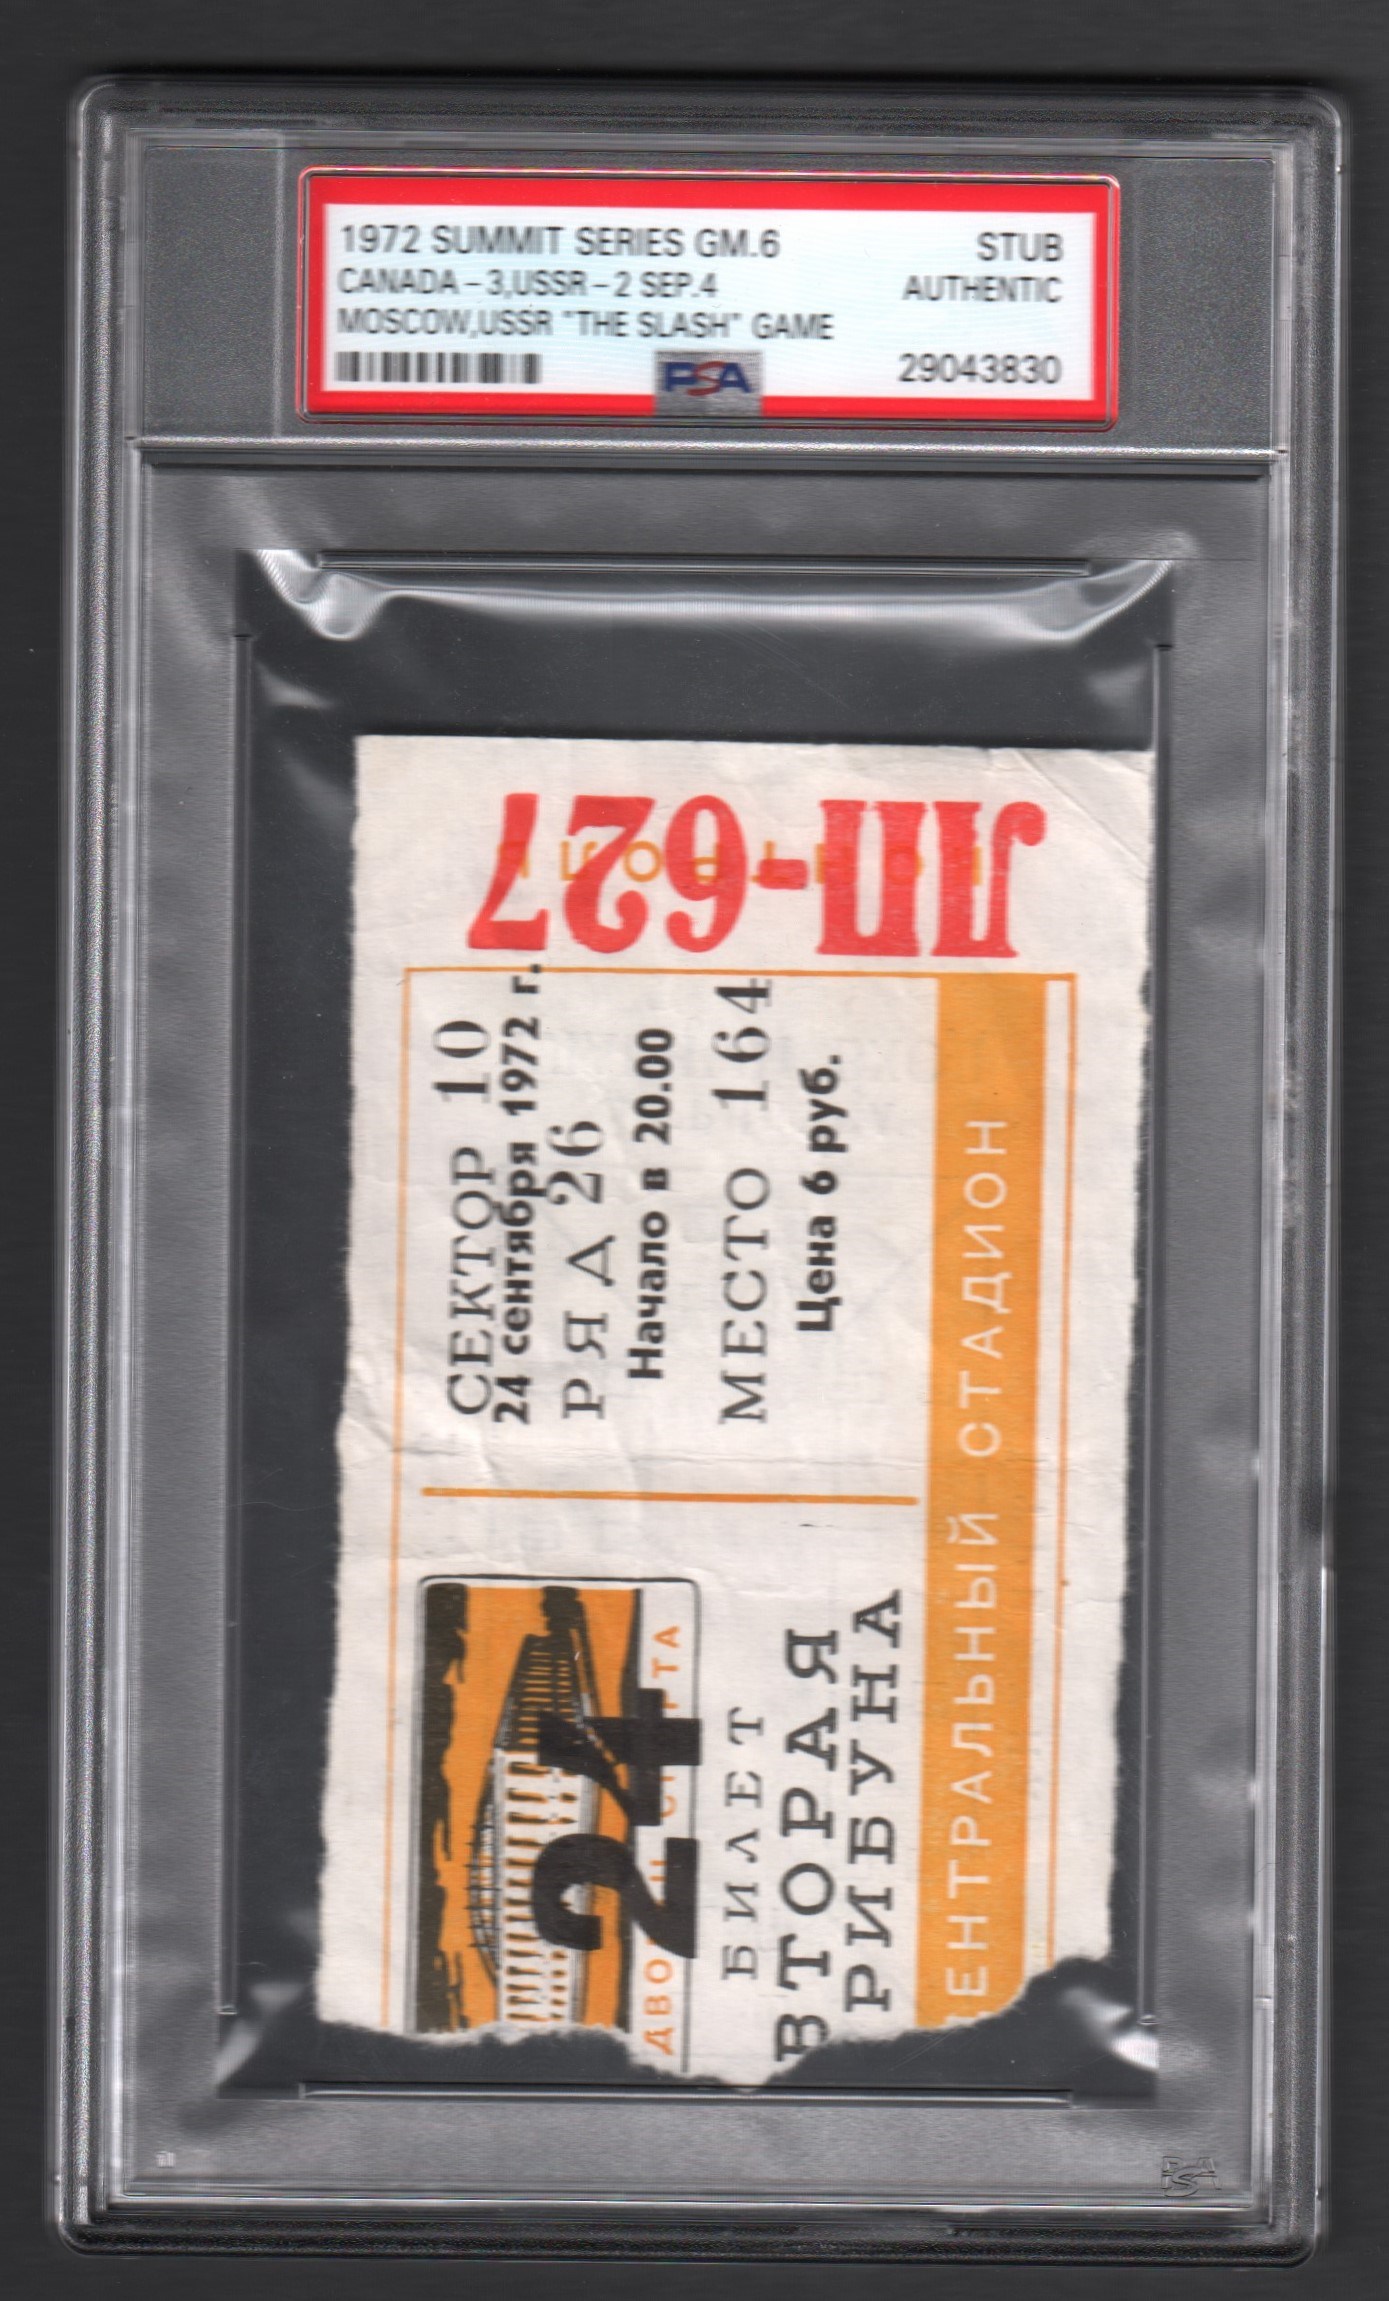 Jean Ratelle's 1972 Summit Series Tickets w/ "The Slash" Game